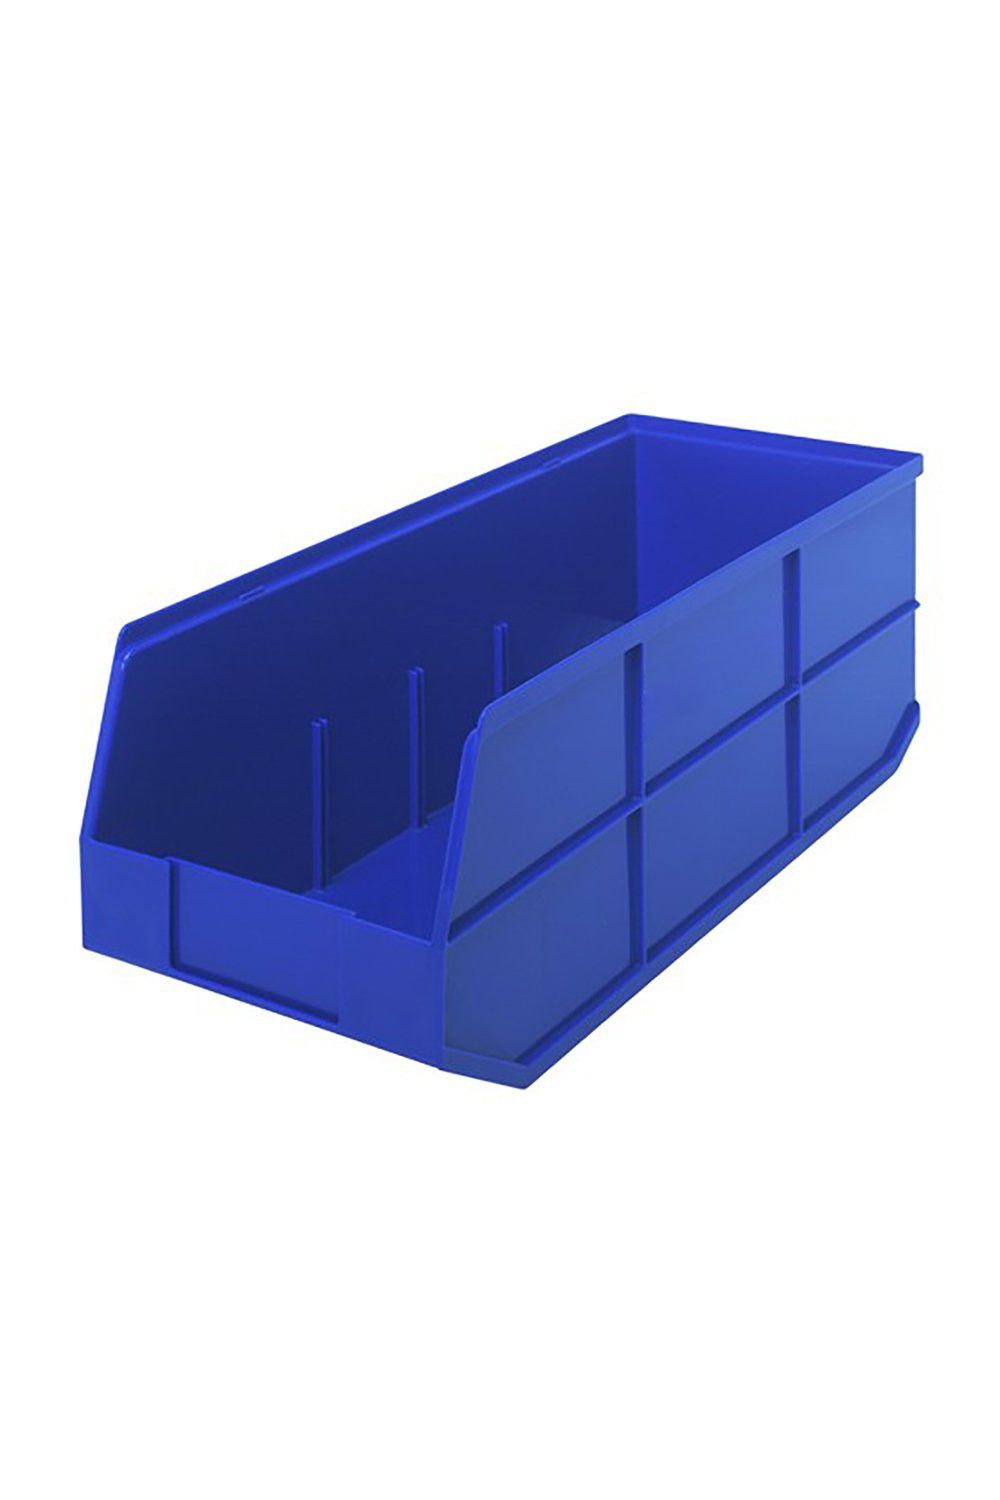 Shelf Bin for 24"D Shelves Bins & Containers Acart 20-1/2" x 8-1/4" x 7" Blue 